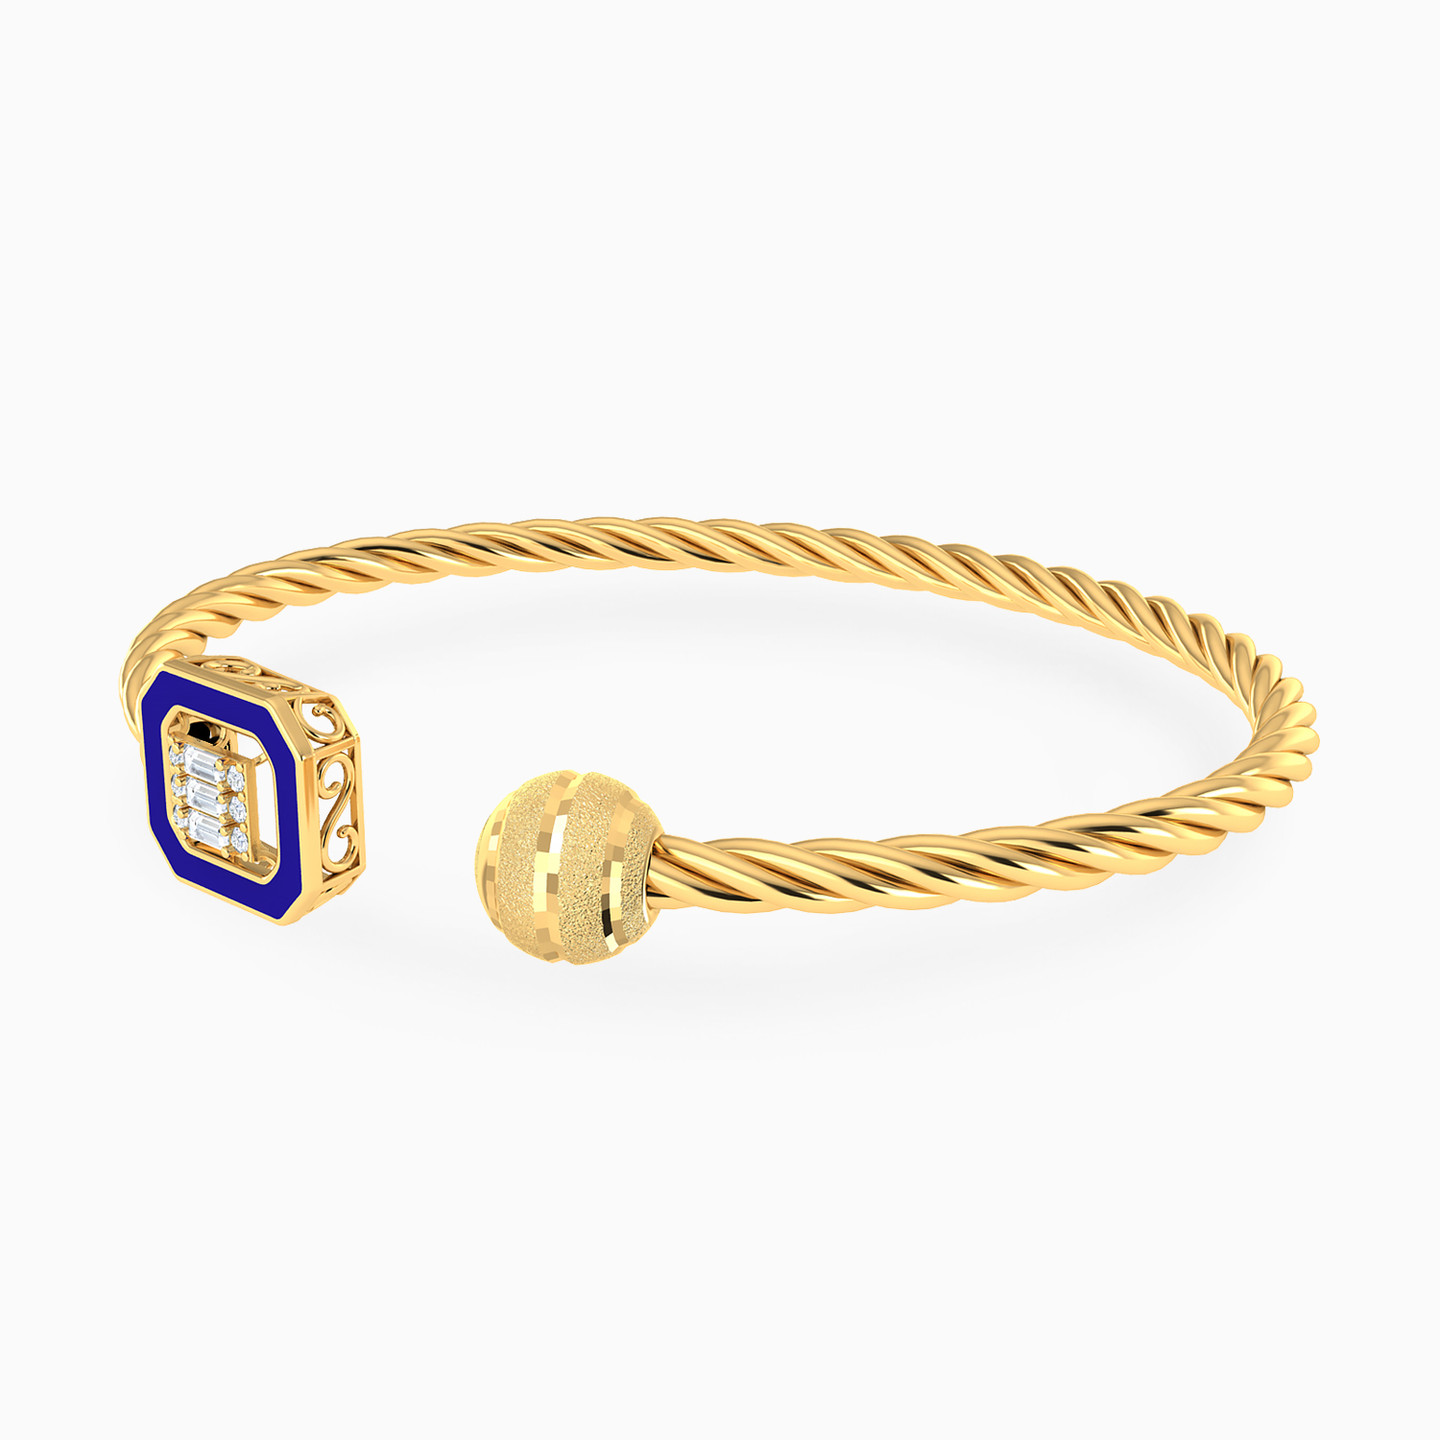 18K Gold Colored Stones & Enamel Coated Cuff Bracelet - 2